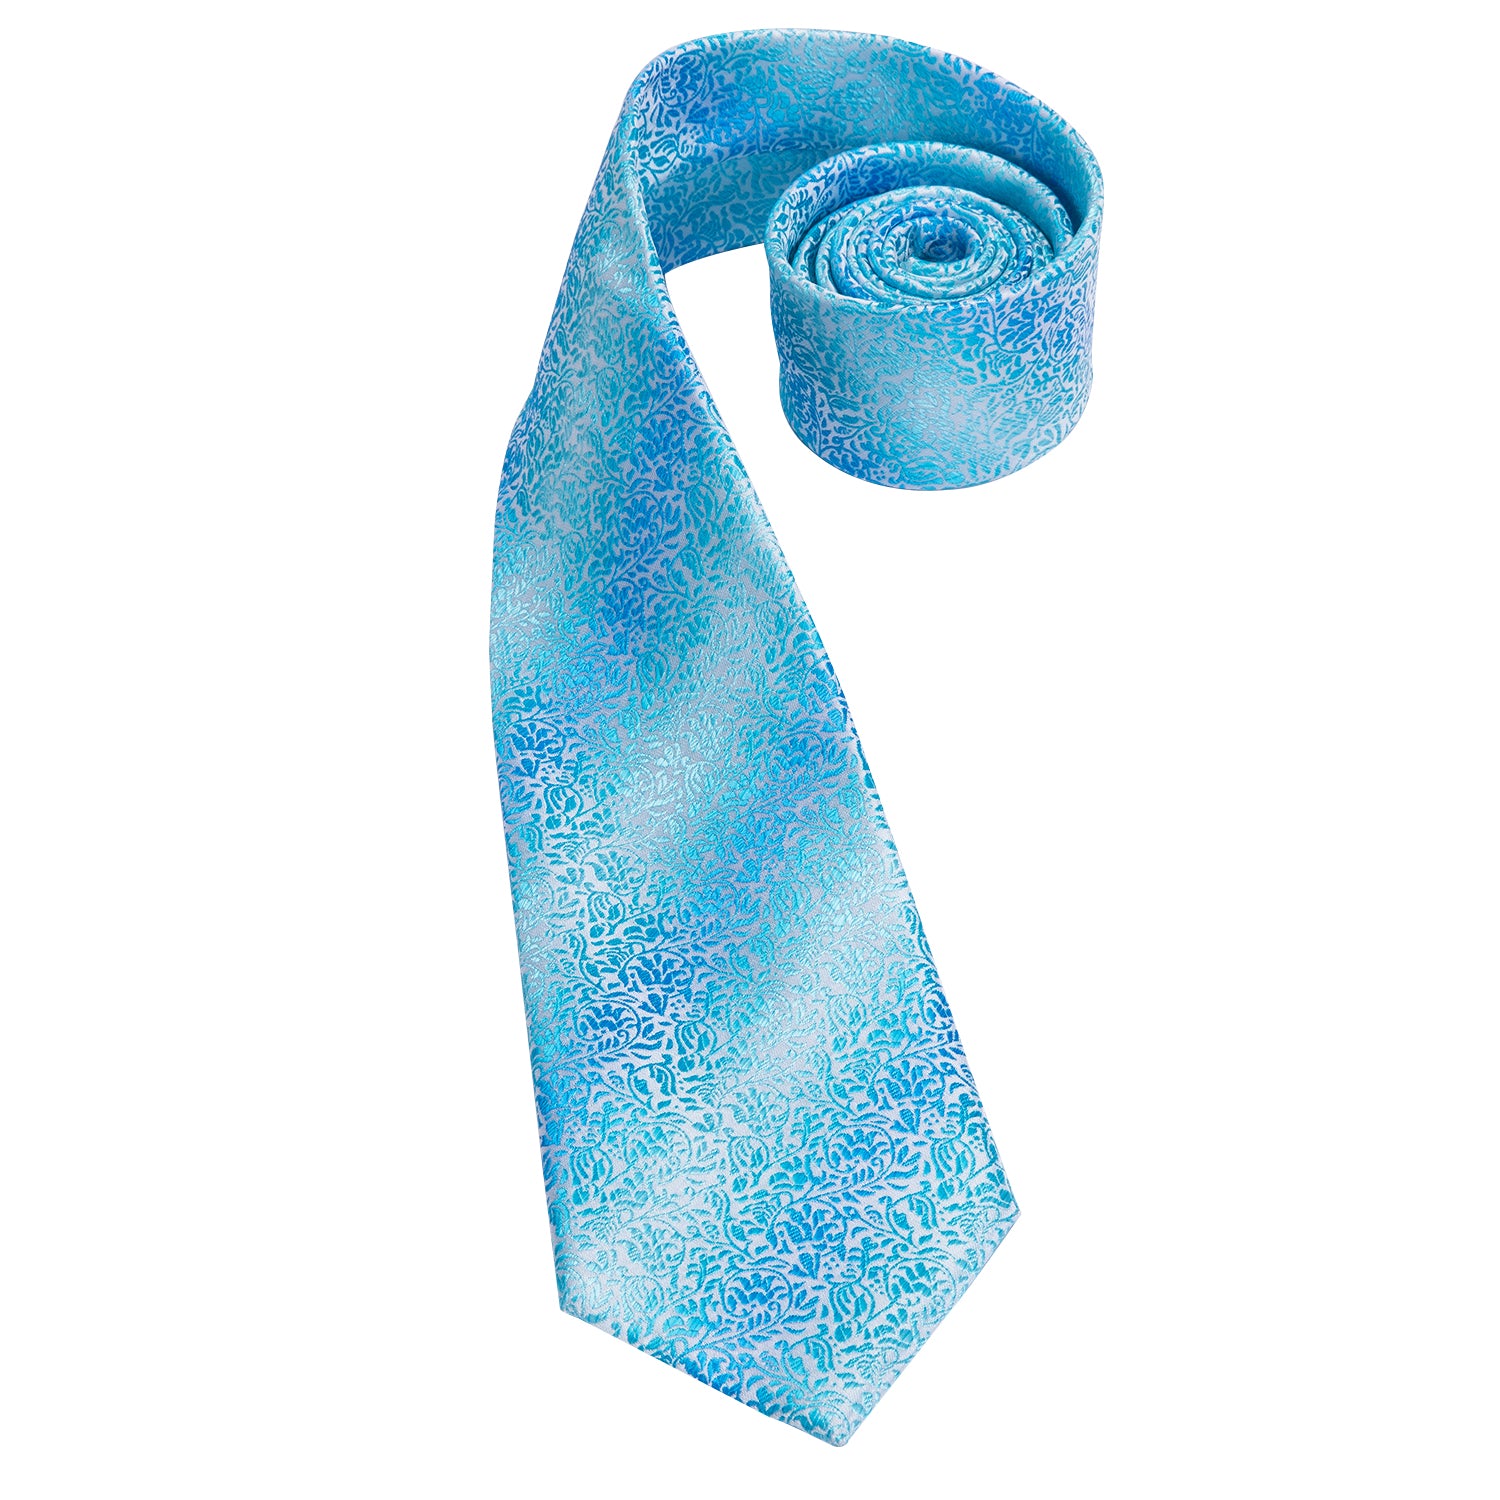  Skyblue Tie Light Blue Floral Men's Necktie Hanky Cufflinks Set